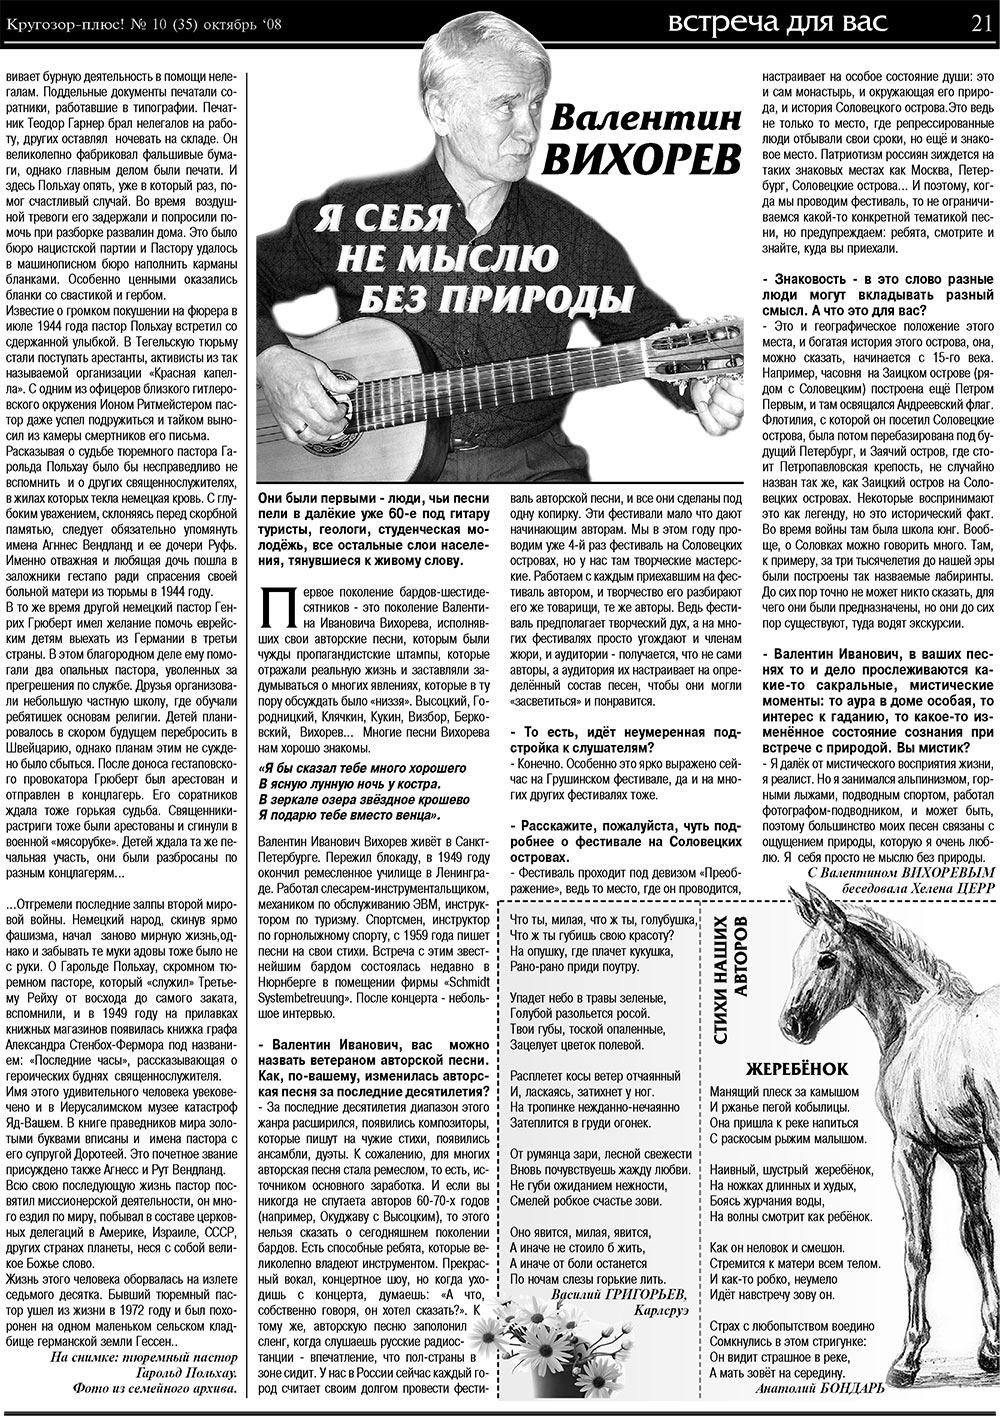 Кругозор плюс! (газета). 2008 год, номер 10, стр. 21